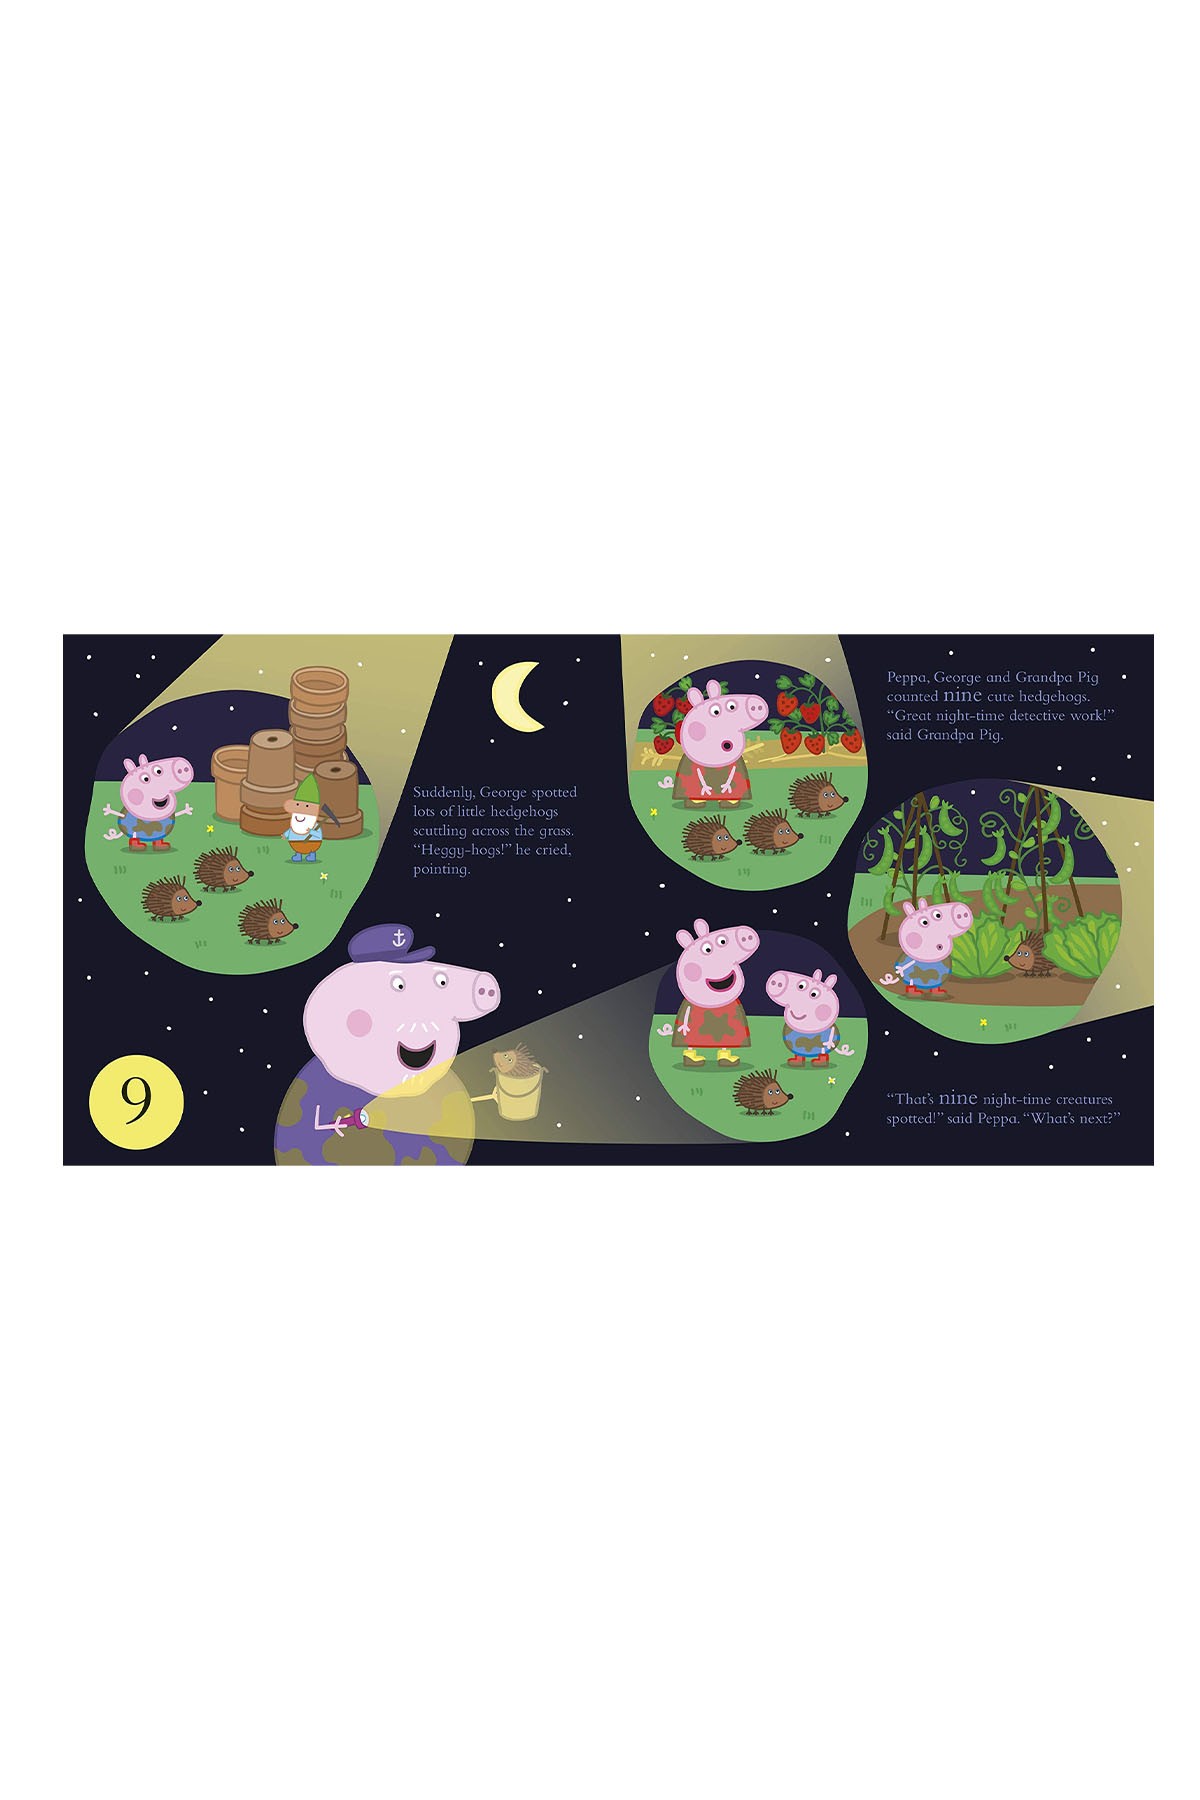 PRH Childrens - Peppa Pig: PeppaS Countdown To Bedtime